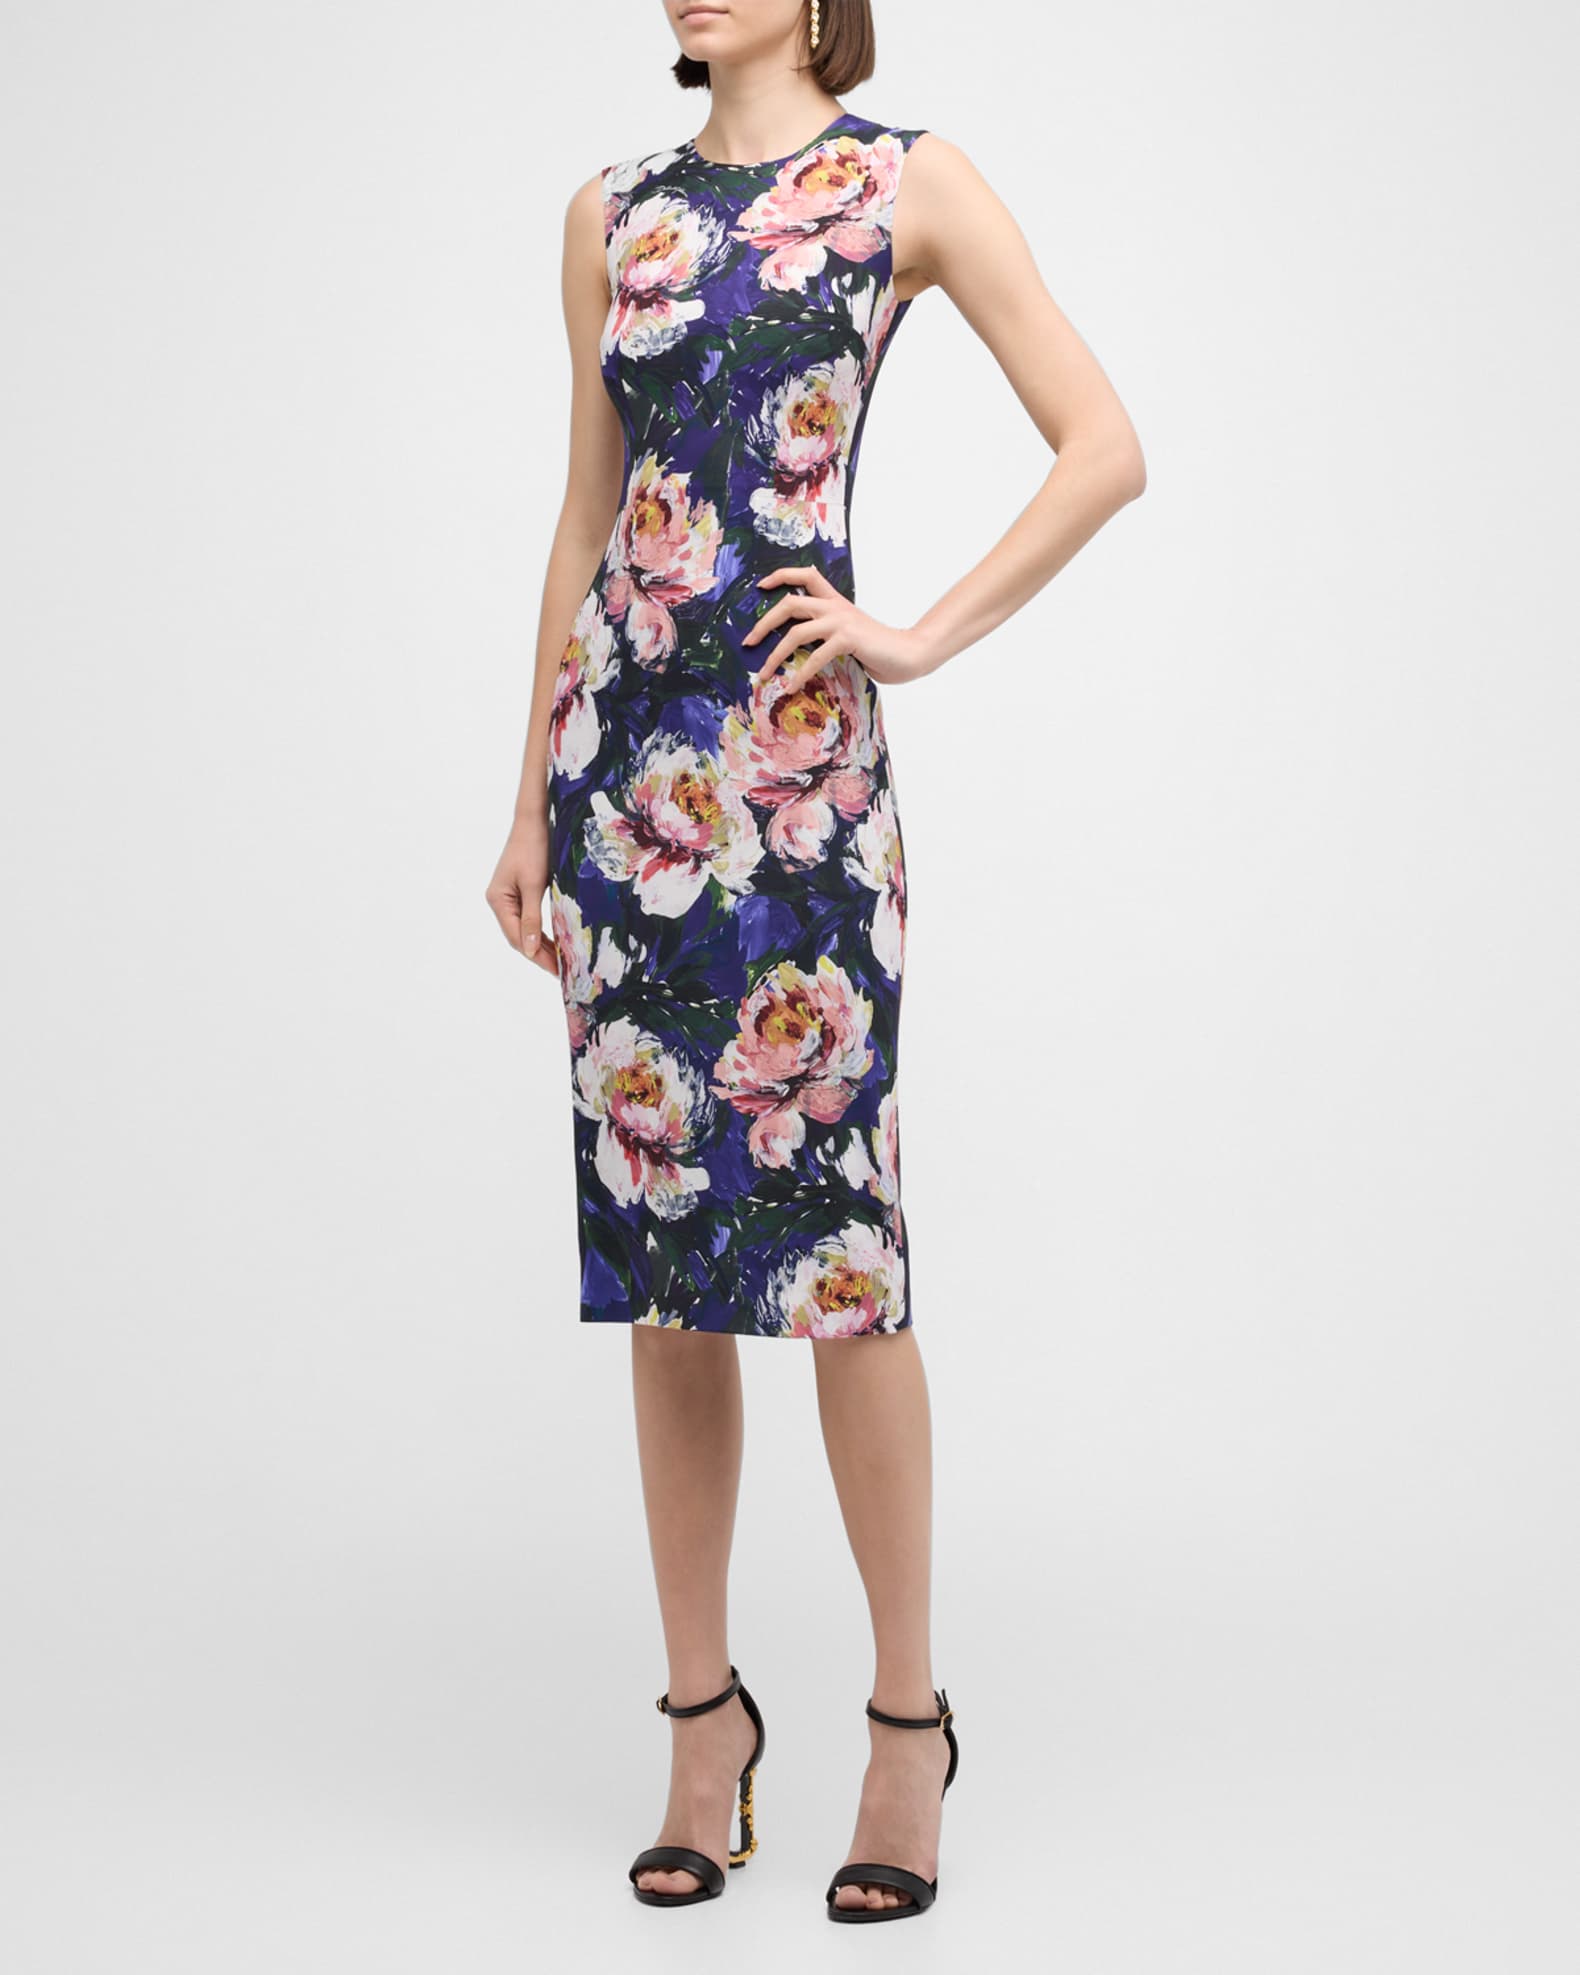 Dolce&Gabbana Cady Floral Print Sheath Dress | Neiman Marcus